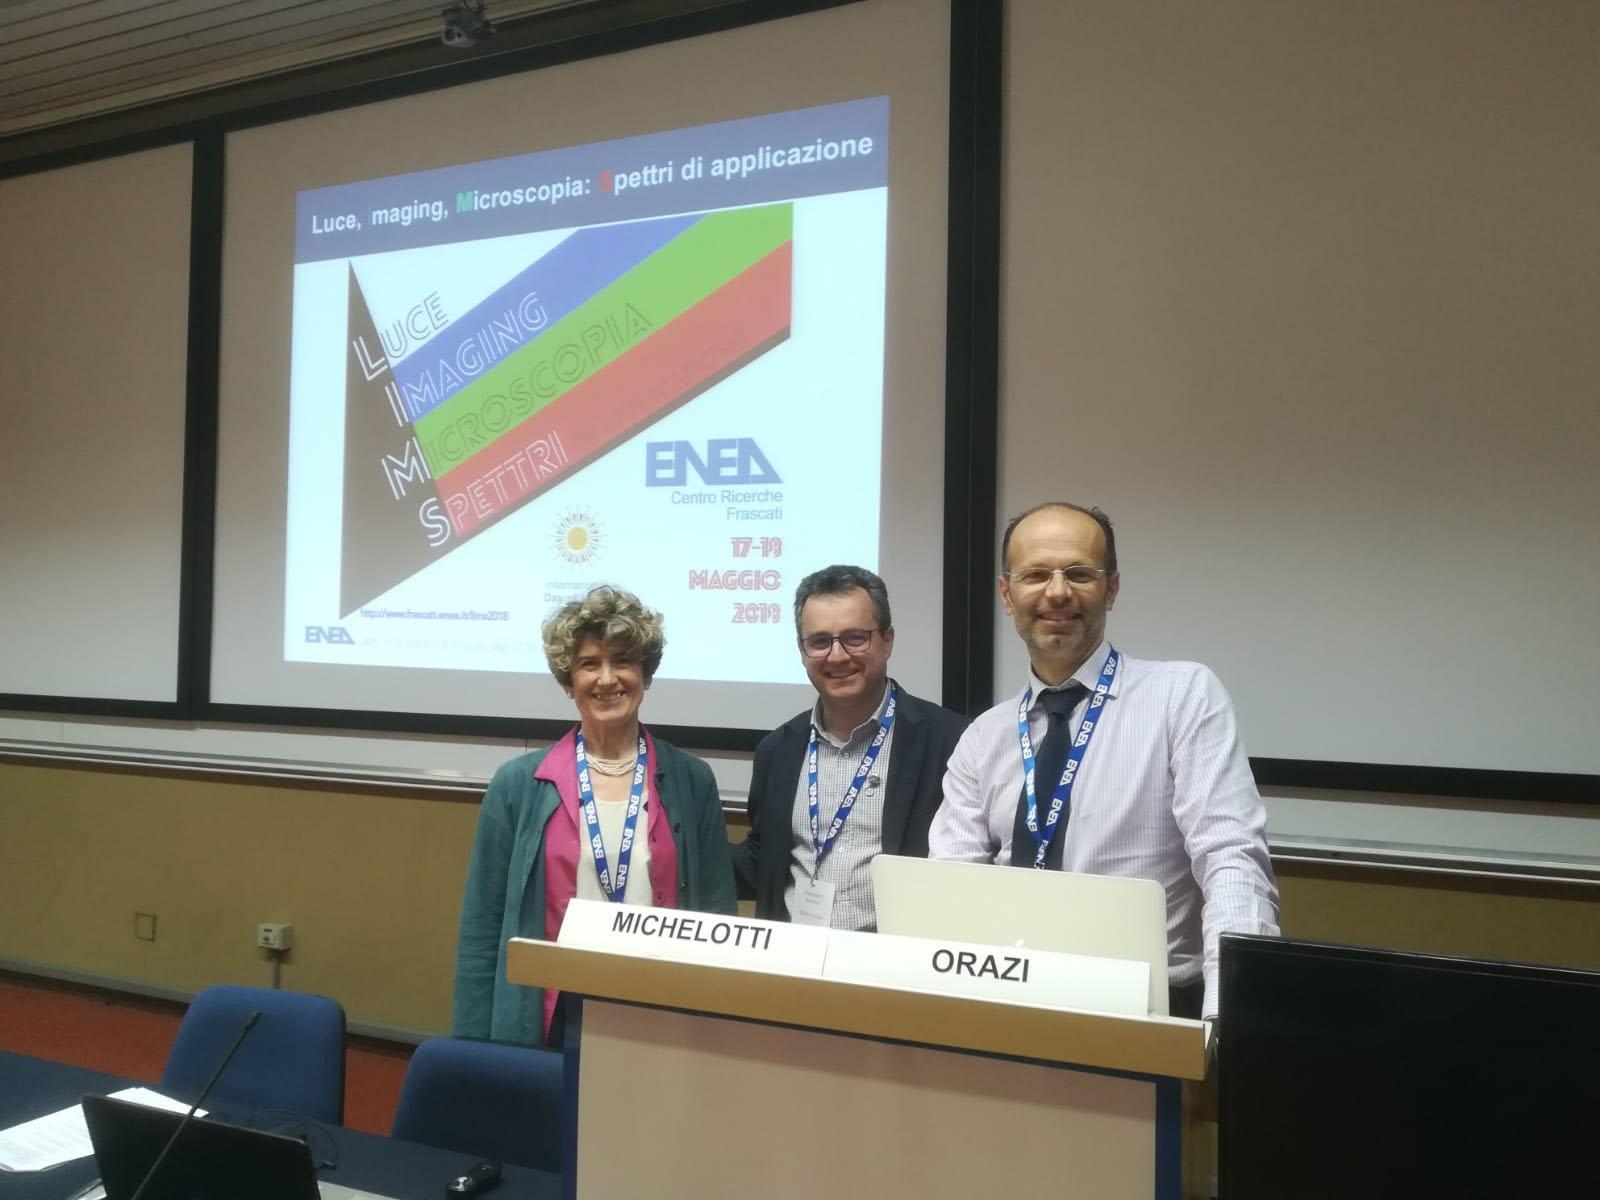 From left to right: Dr.ssa M.M. Dugand (CRF), Dr. F. Antolini (ENEA) and Prof. L. Orazi (University of Modena and Reggio Emilia) at LIMS 2018.